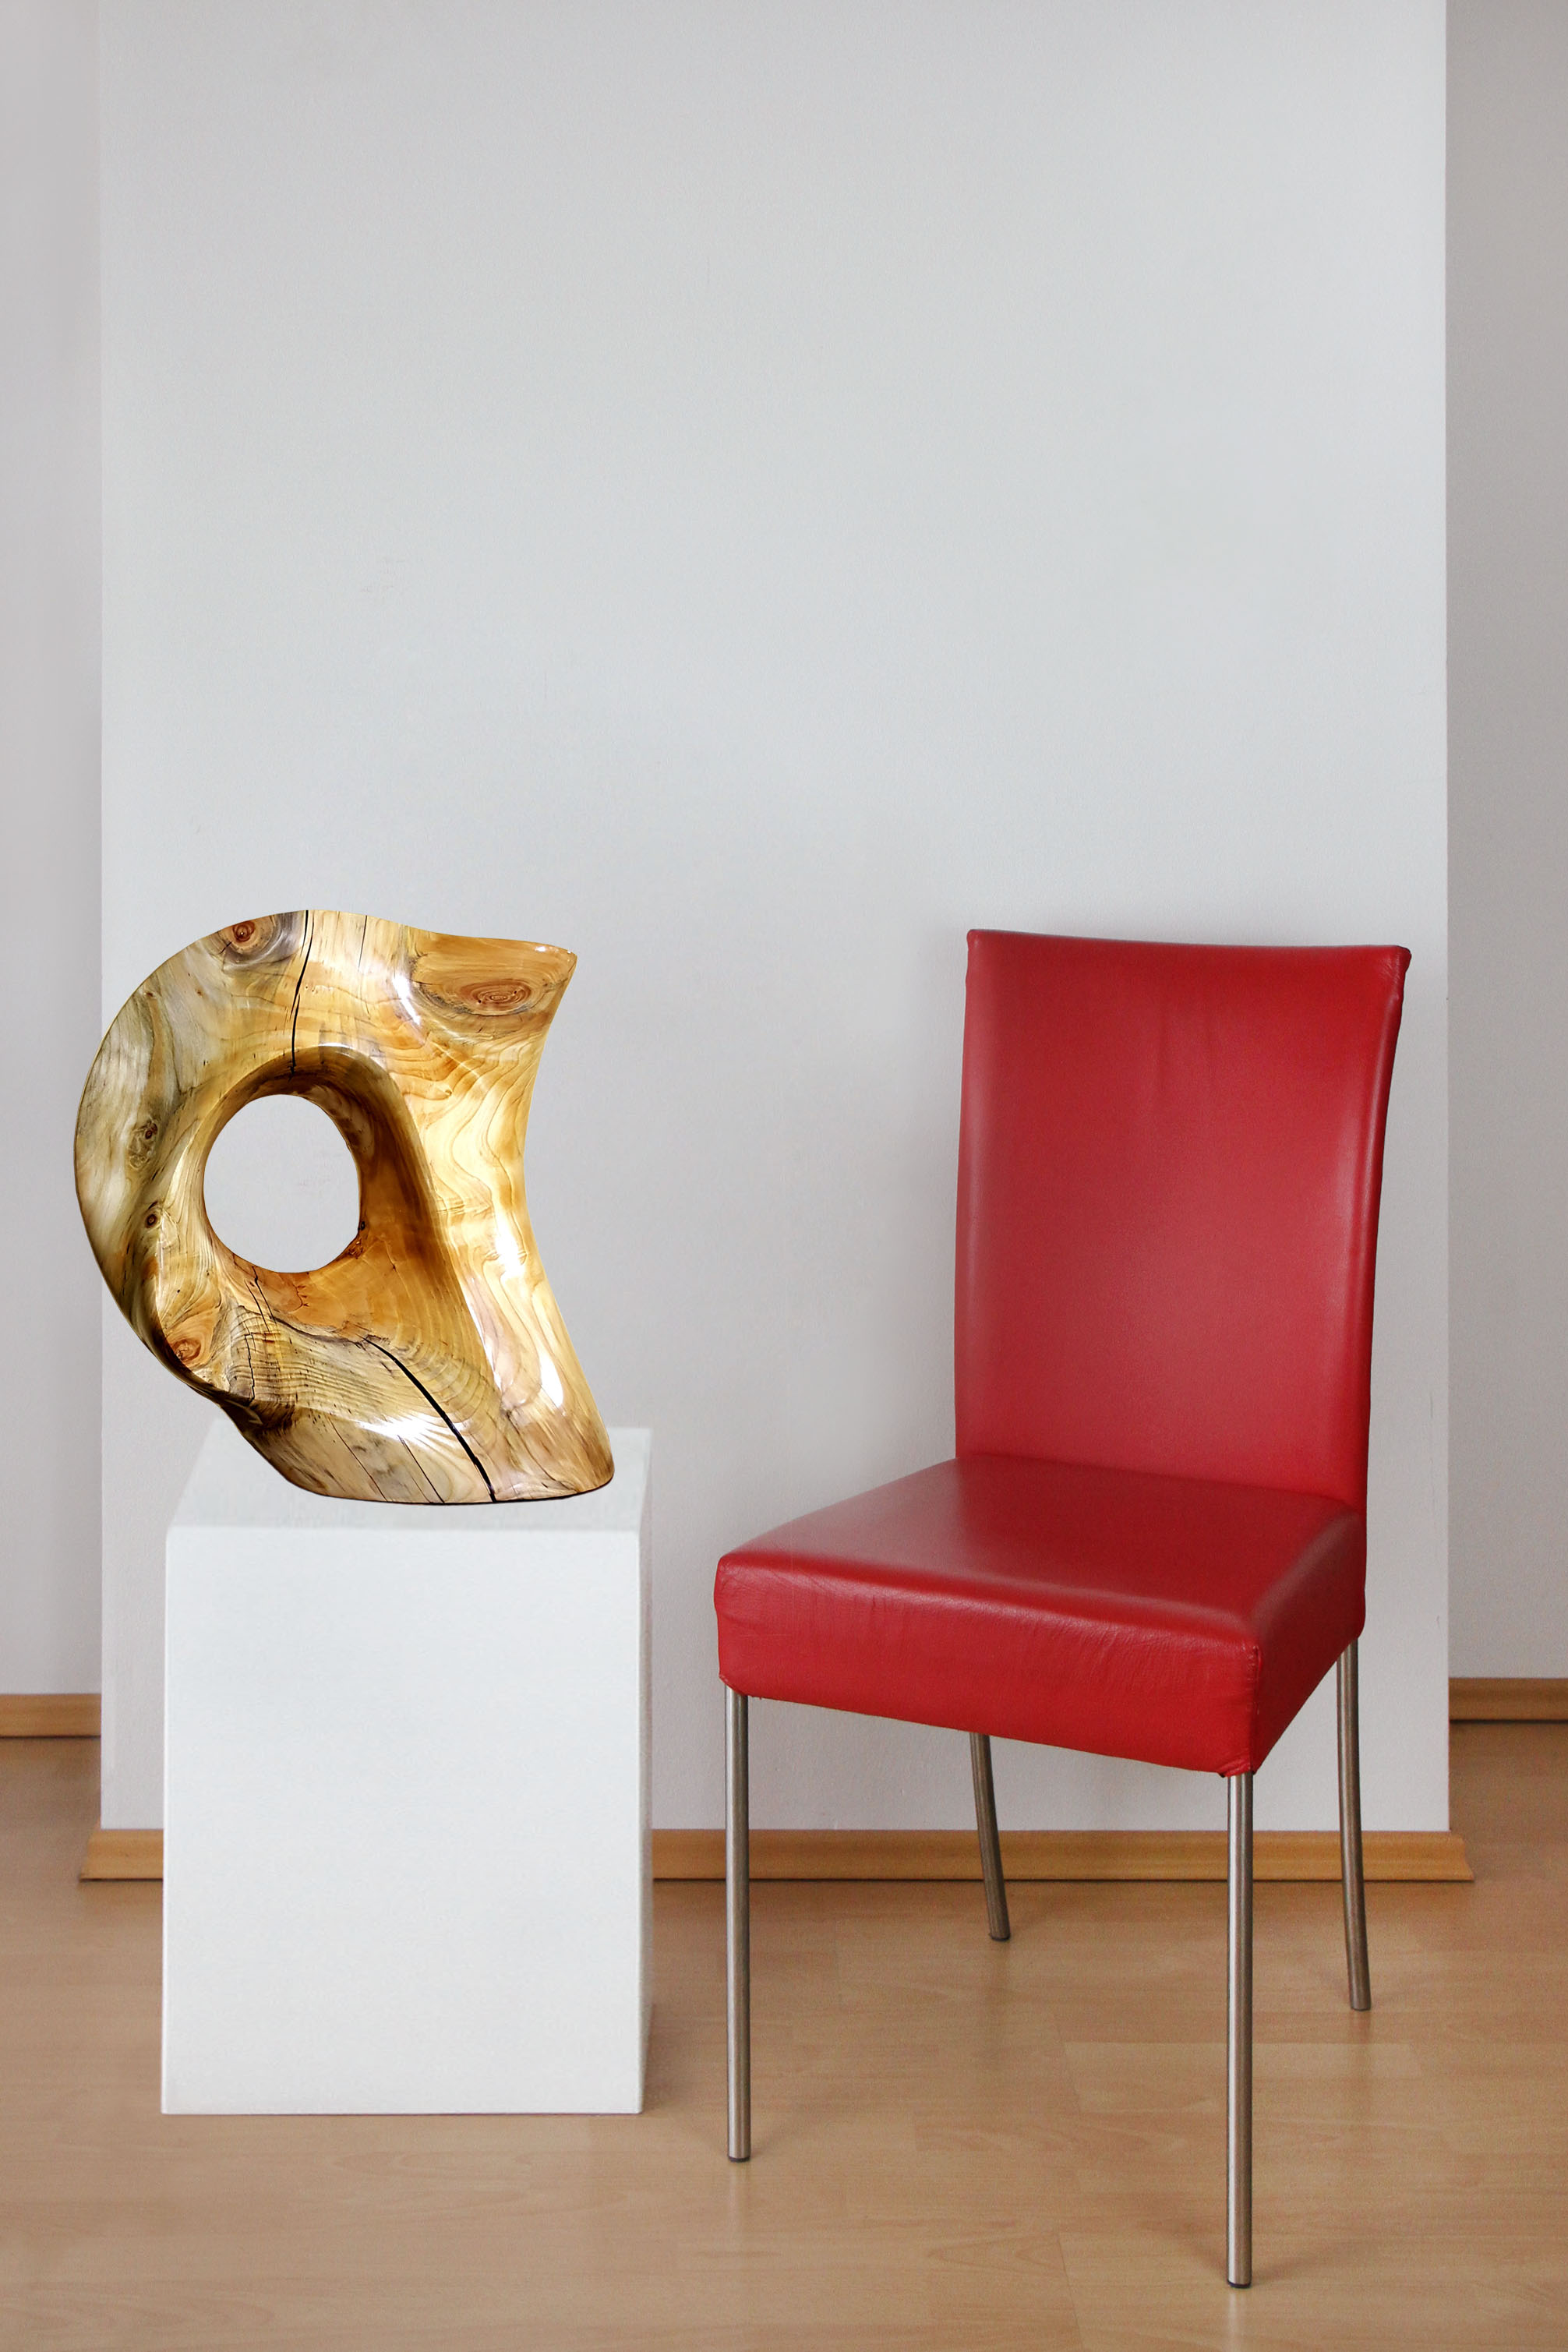 Moderne Skulptur: Stille bewegt, Original/Unikat, H.J. Gorenflo